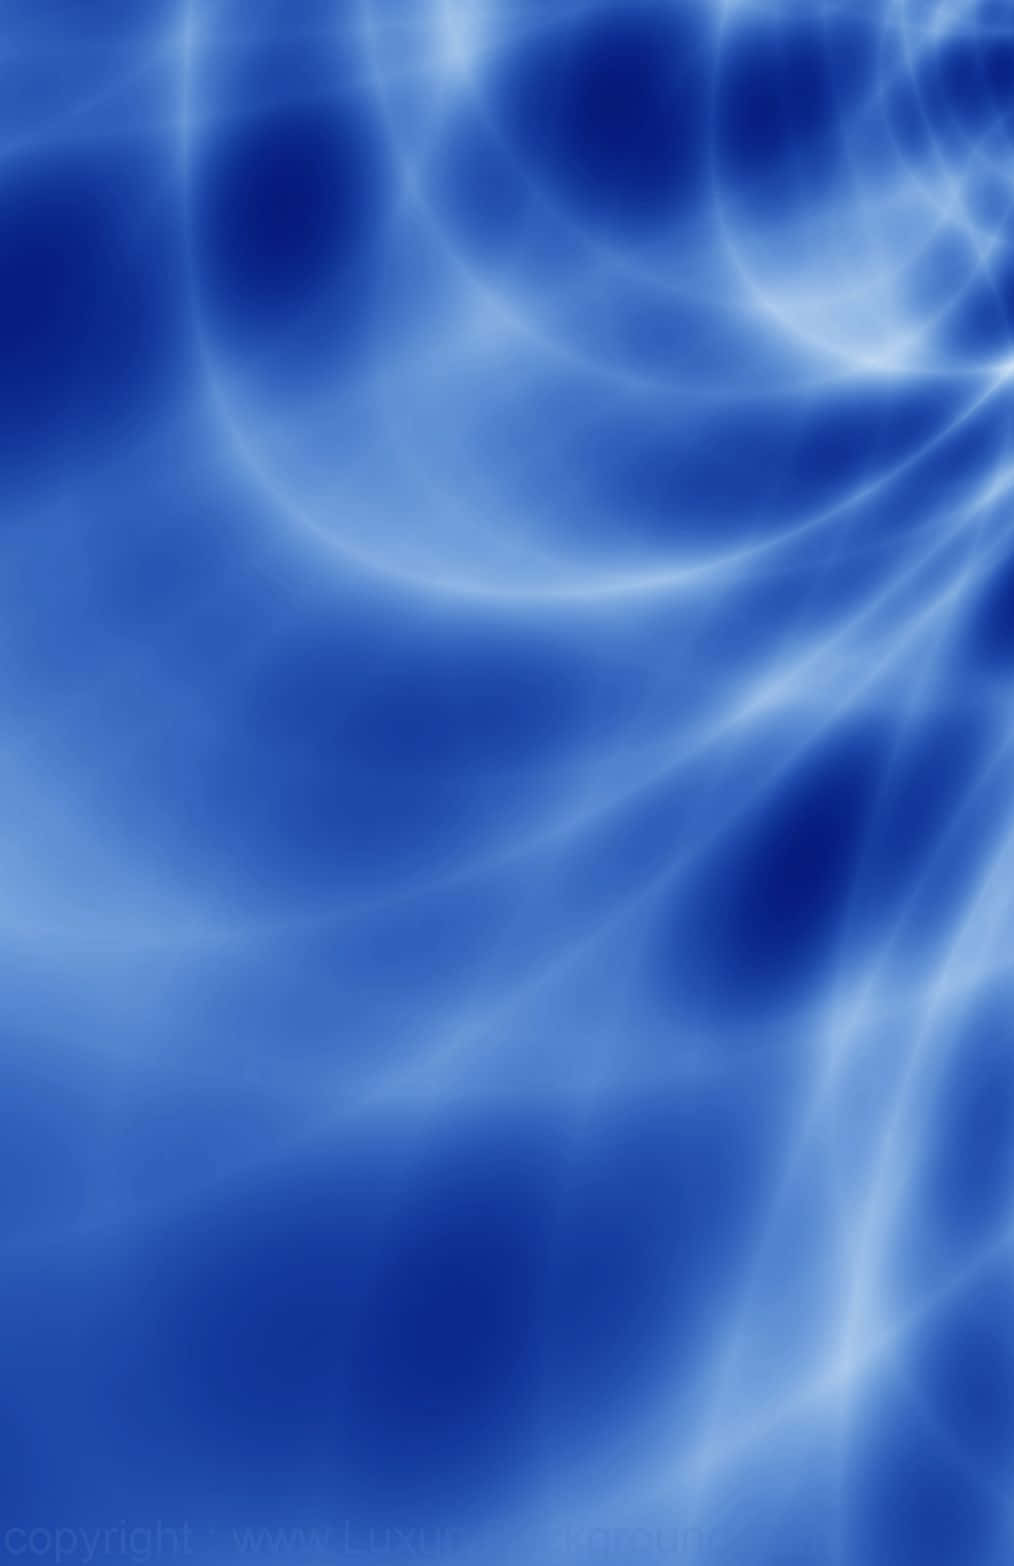 Glowing Blue Phone Screensaver Wallpaper